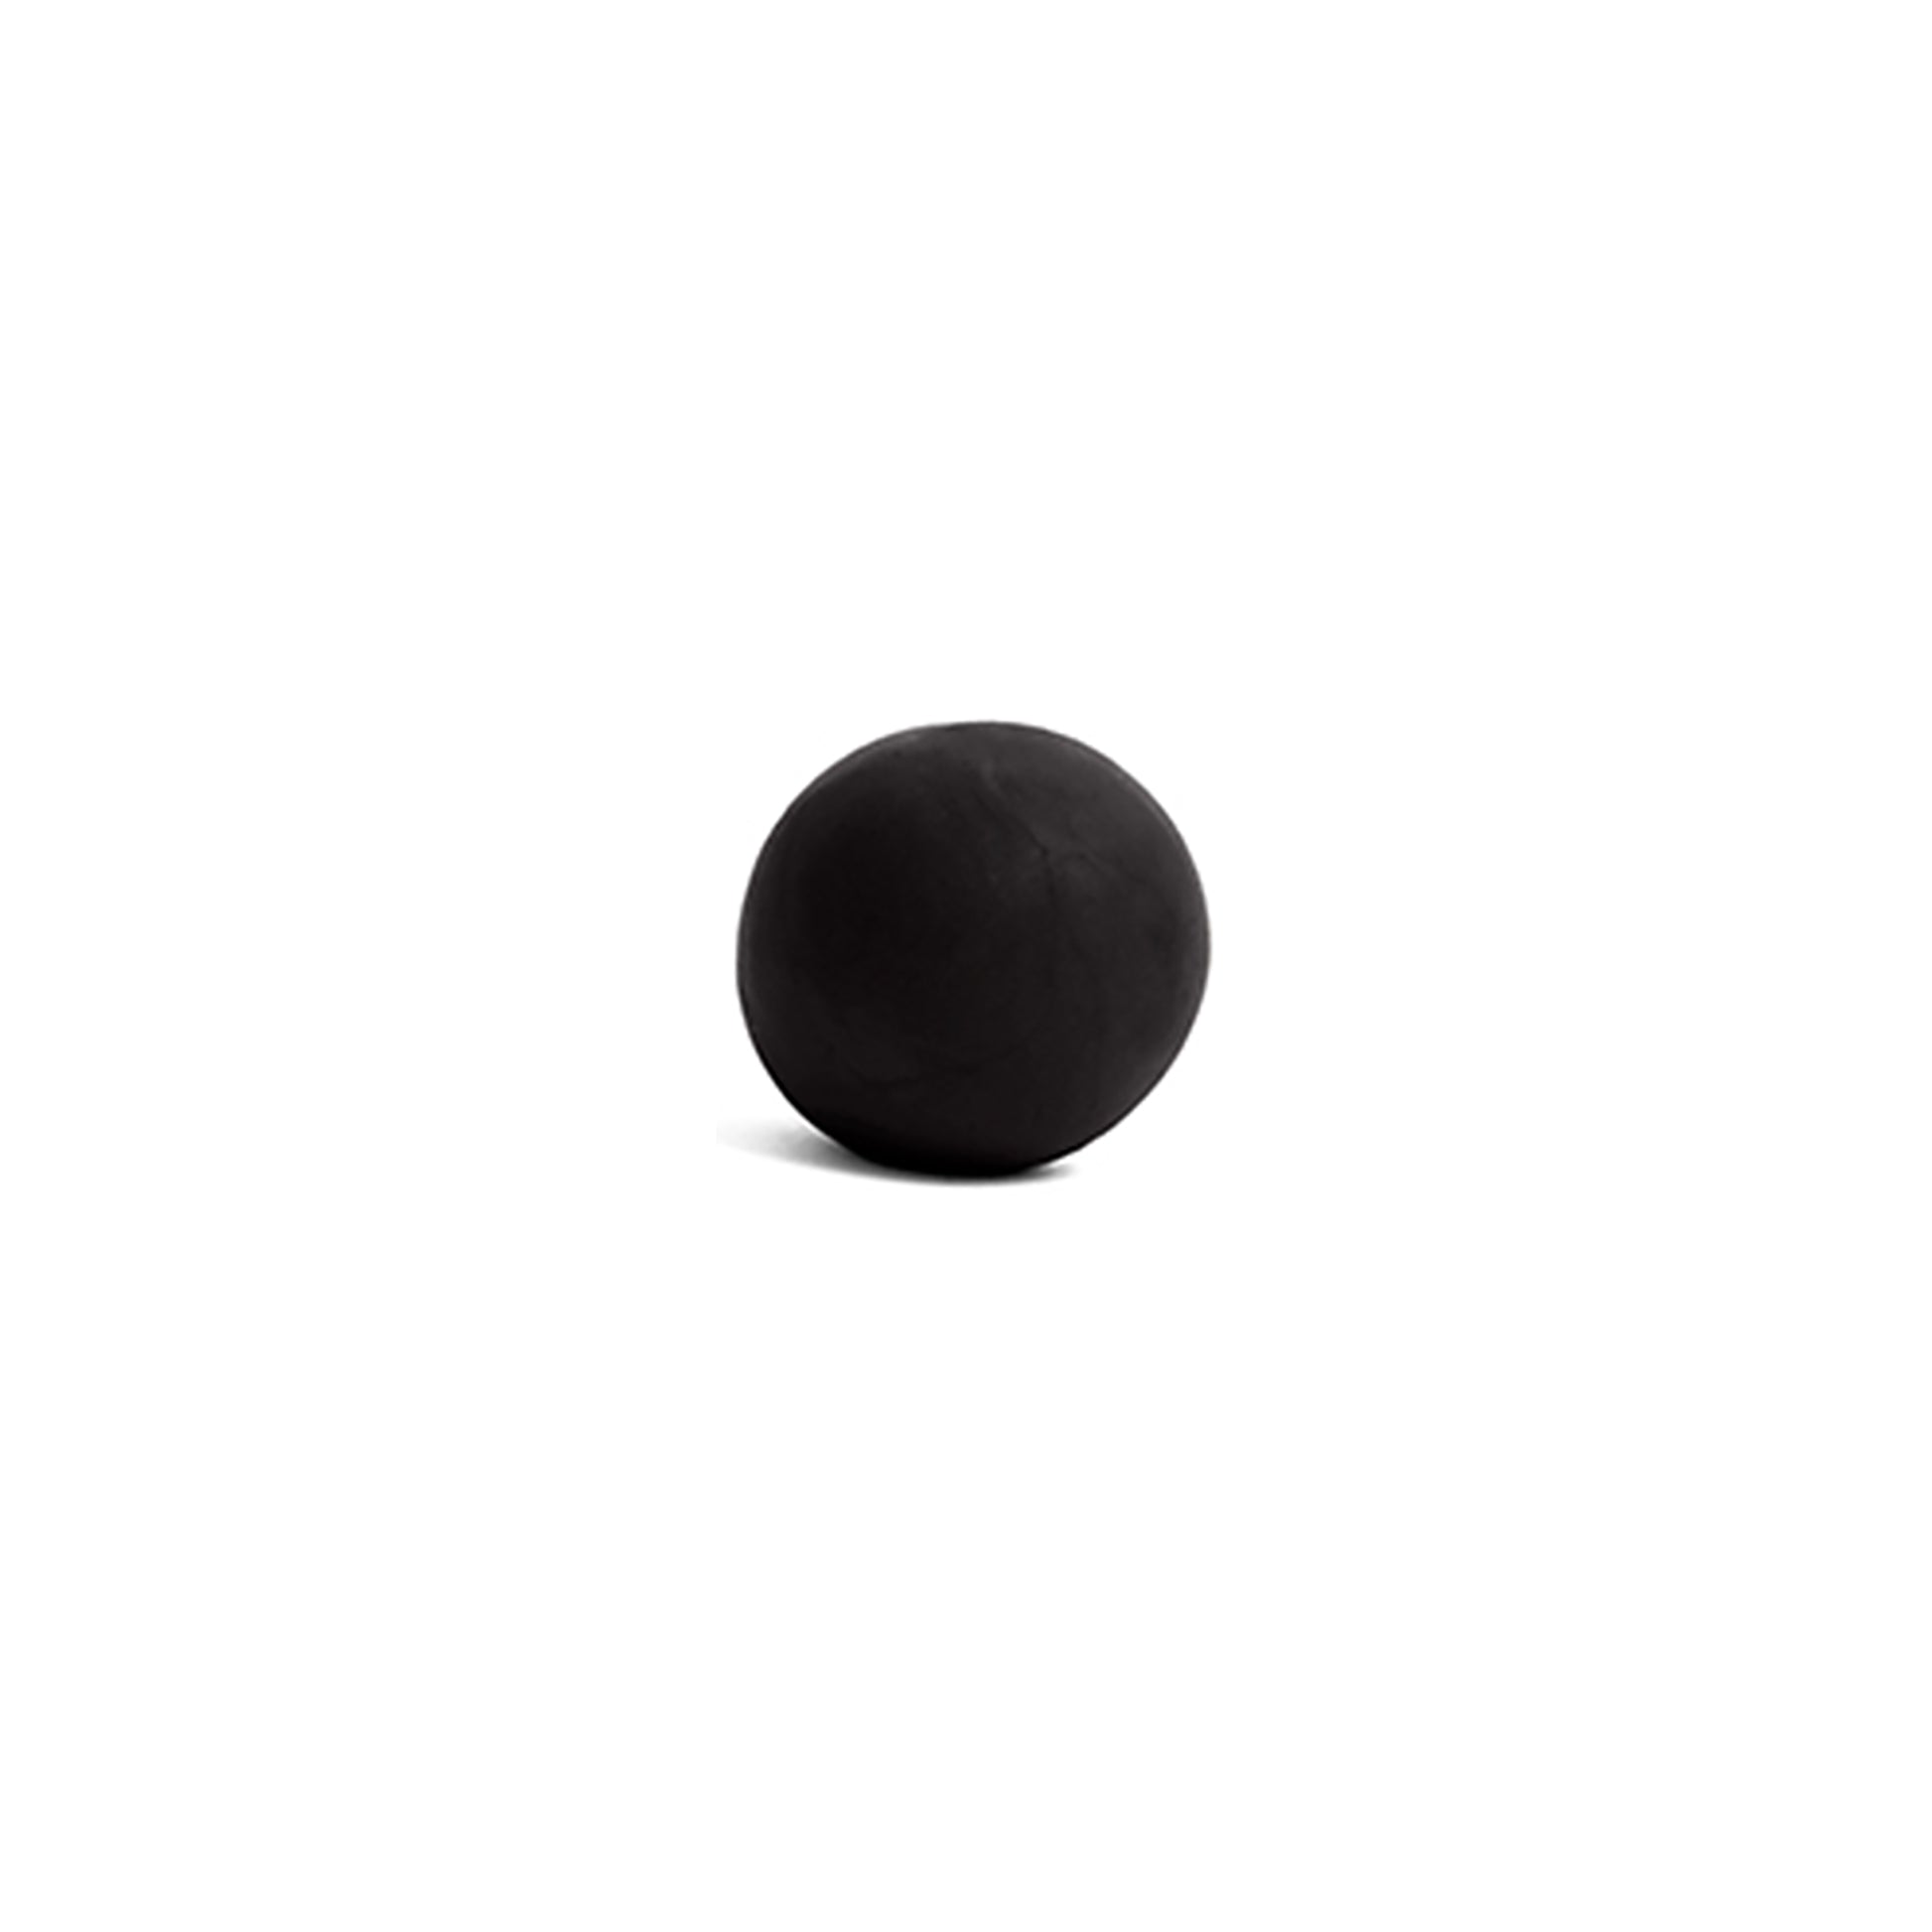 ChocoPan Black Chocolate Fondant - 5 lb. Pail - Satin Ice